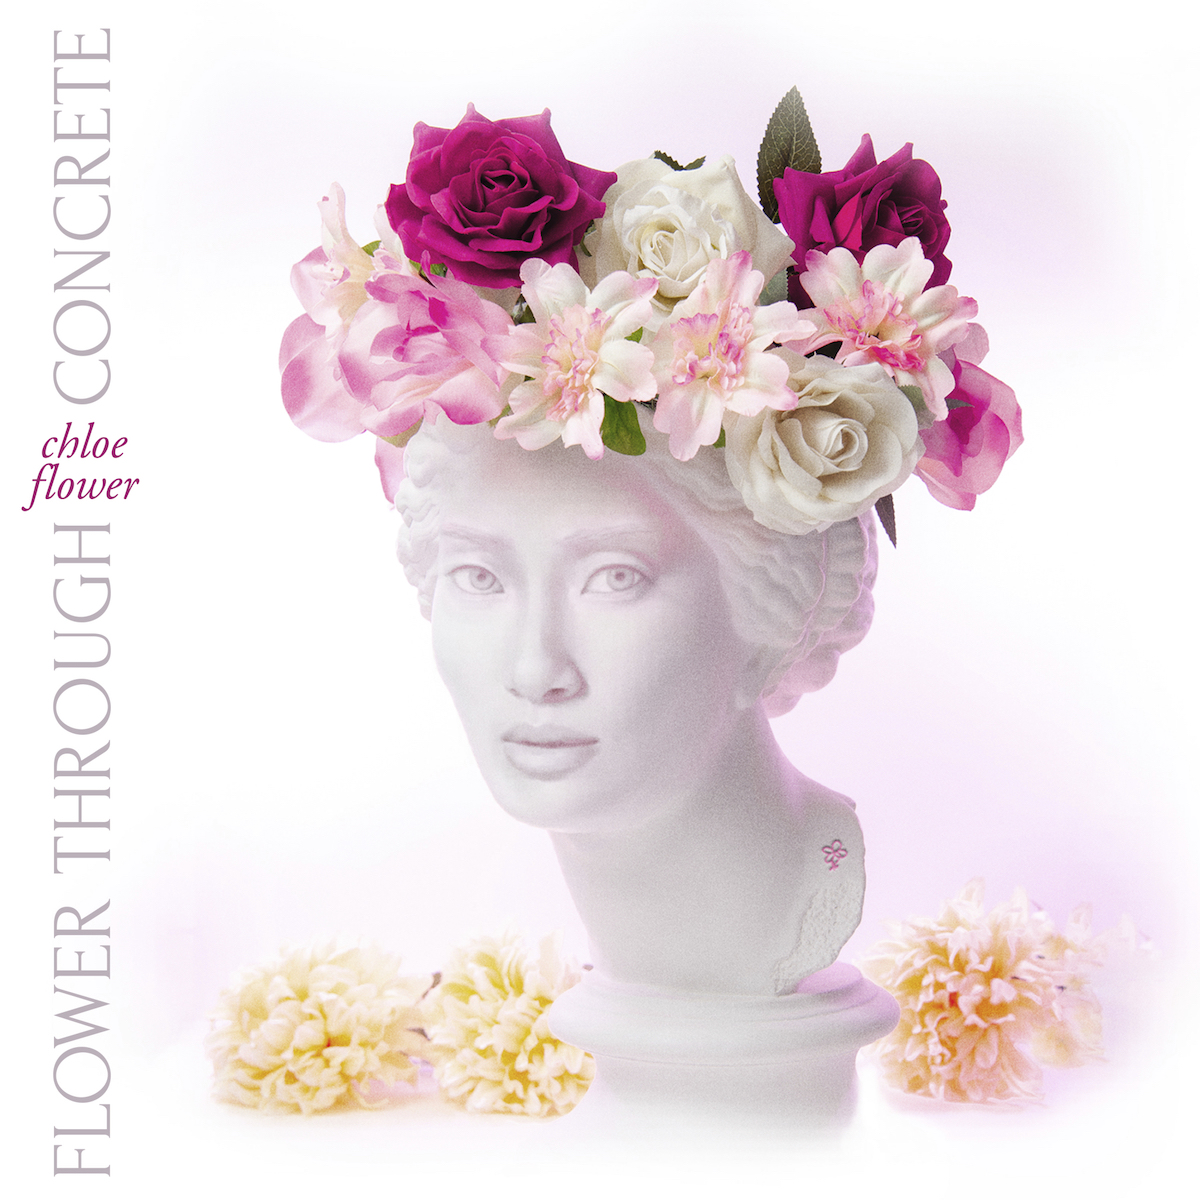 Chloe Flower debuts music video for new single “Flower Through Concrete”